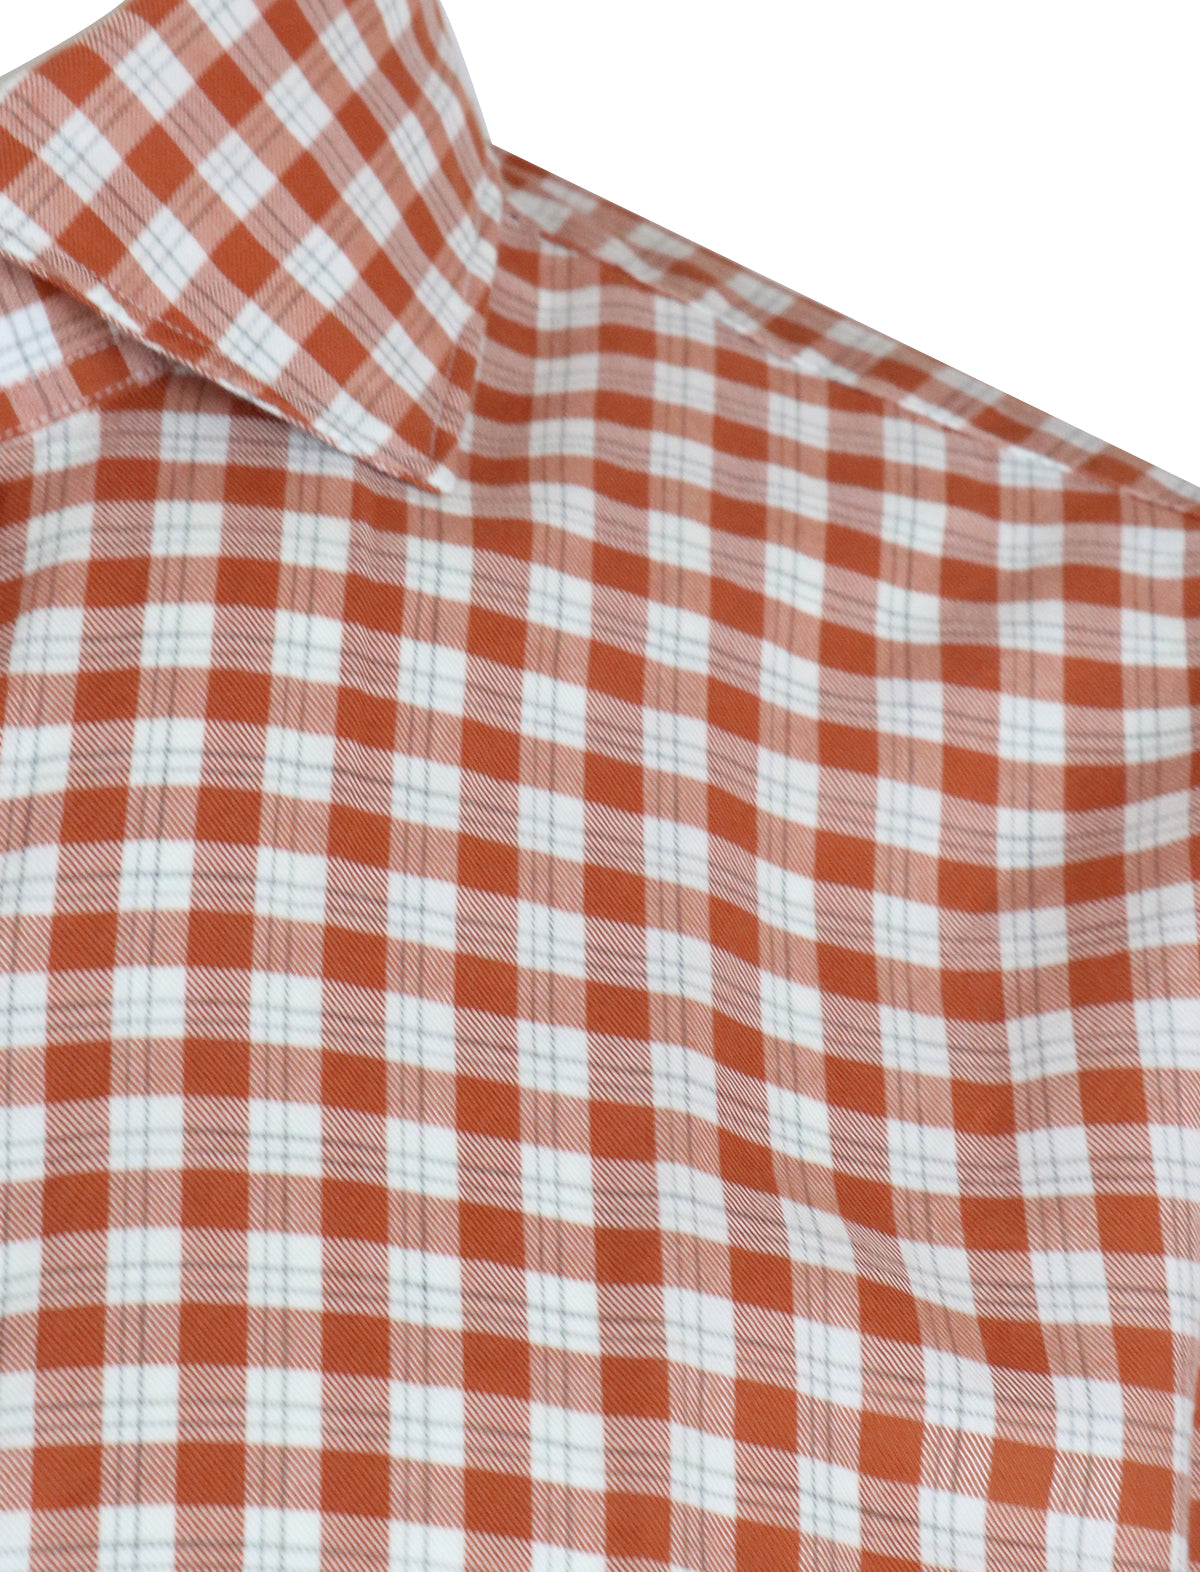 Giannetto Portofino Printed Shirt in Red/White Gingham